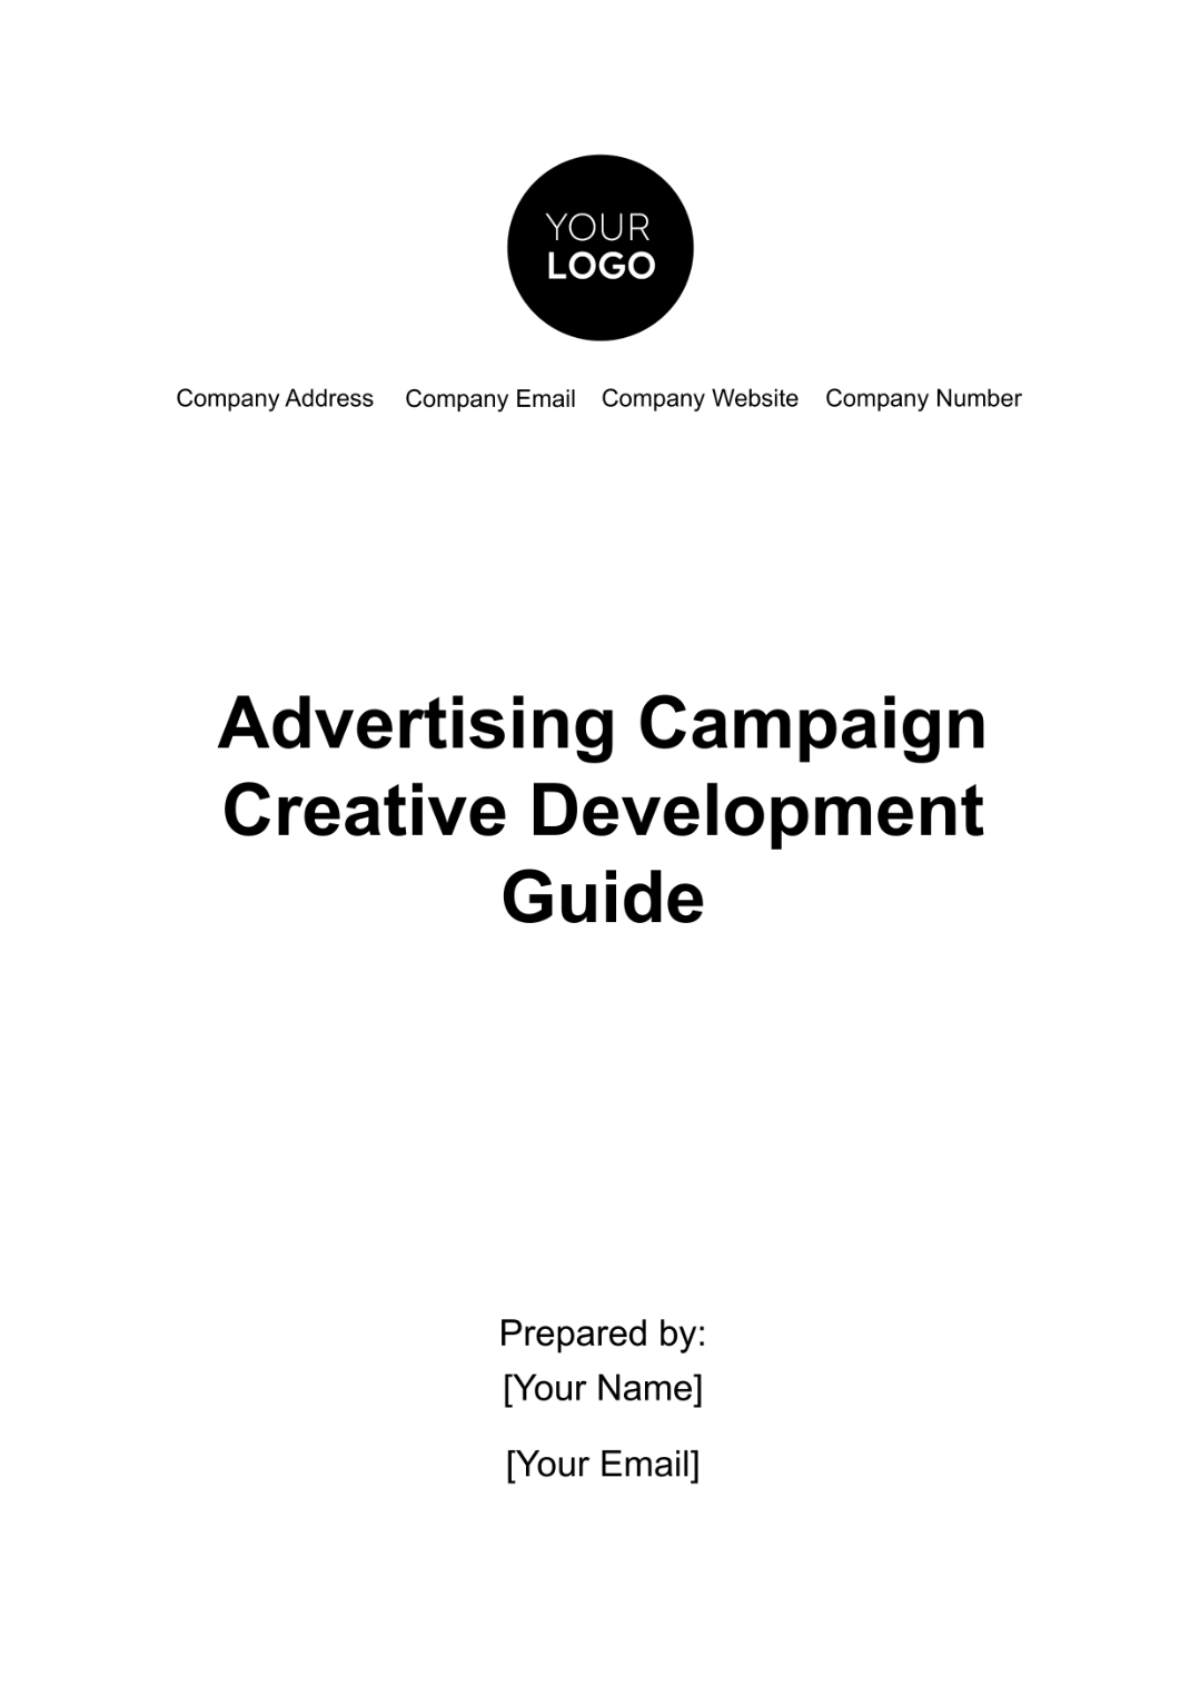 Advertising Campaign Creative Development Guide Template